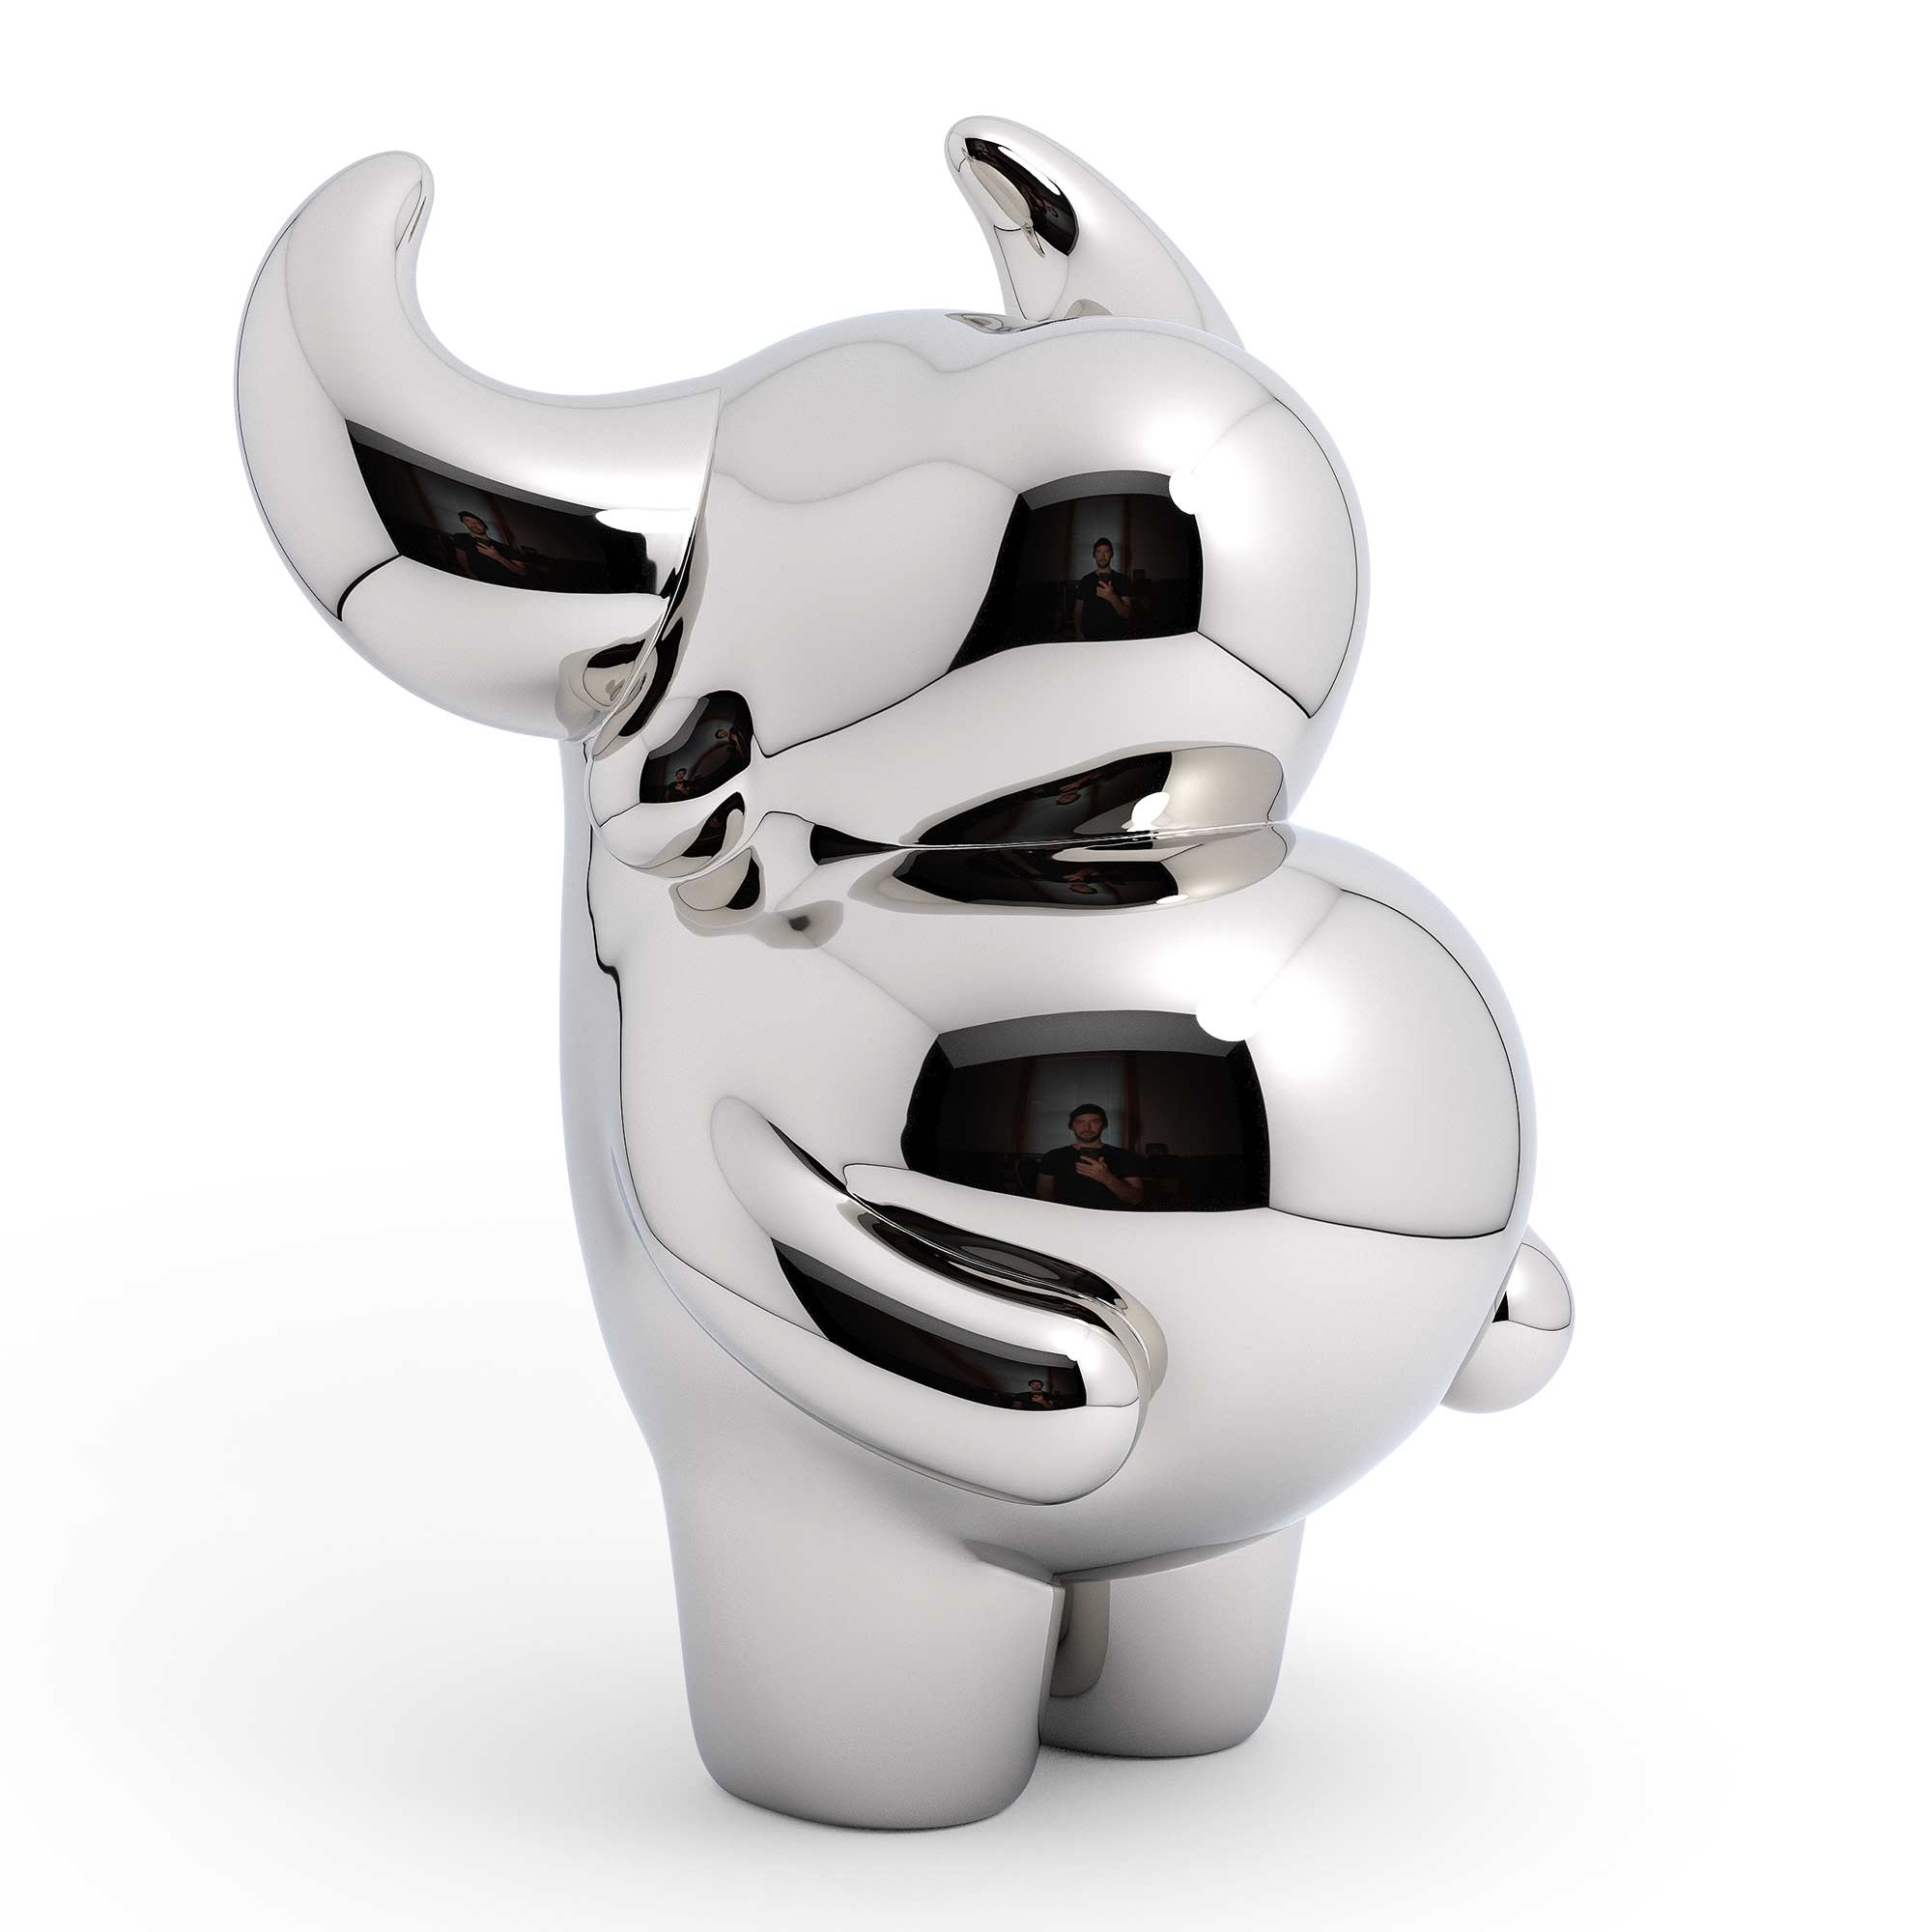 OX “prosperous” bull sculpture, Mirror Polished Stainless Steel Sculpture, by artist Ferdi B Dick, 45 view 